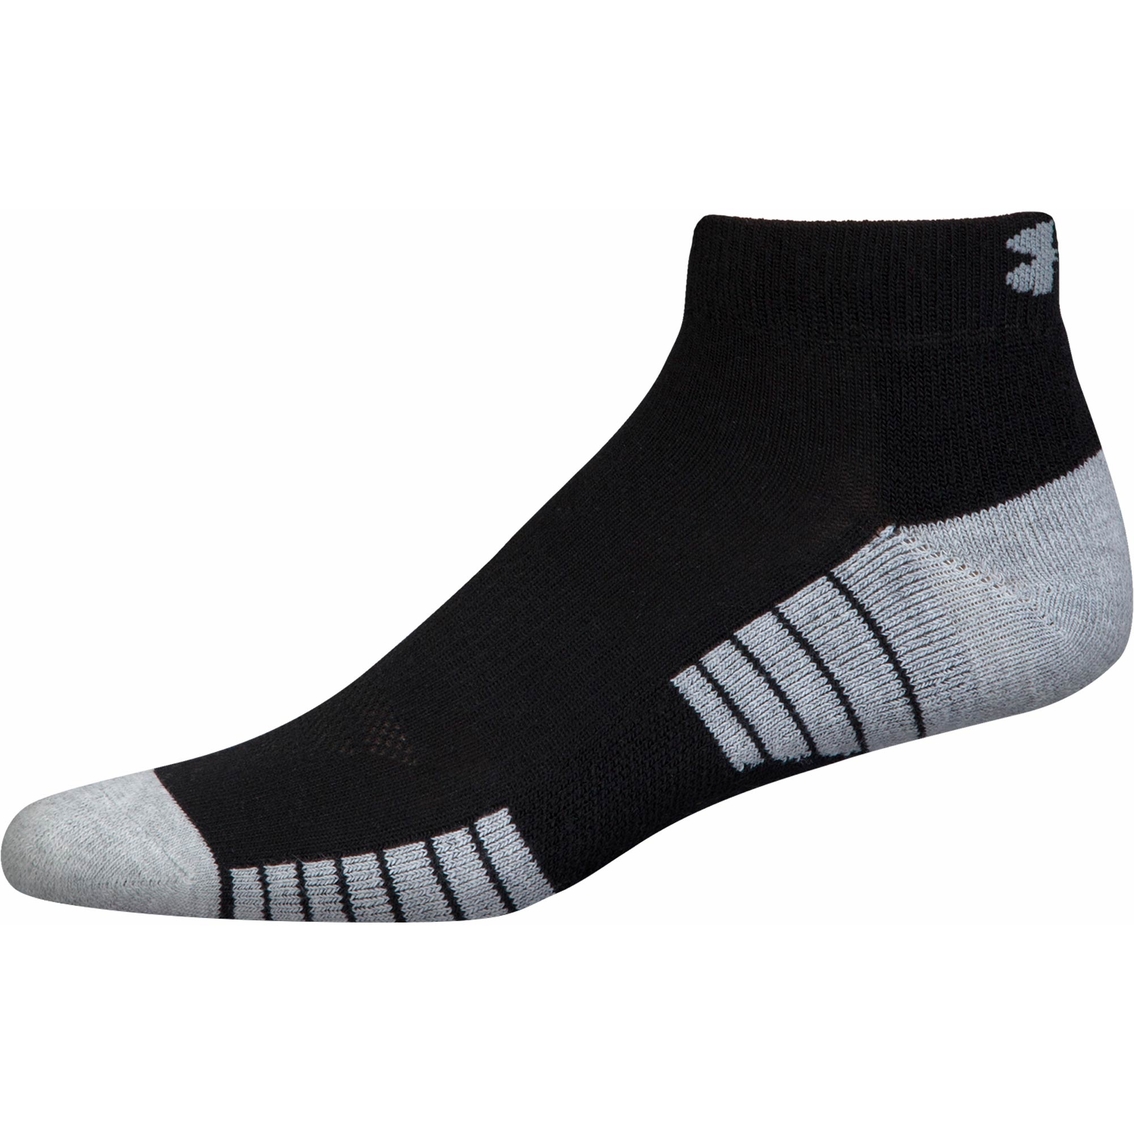 Under Armour Heatgear Socks Size Chart